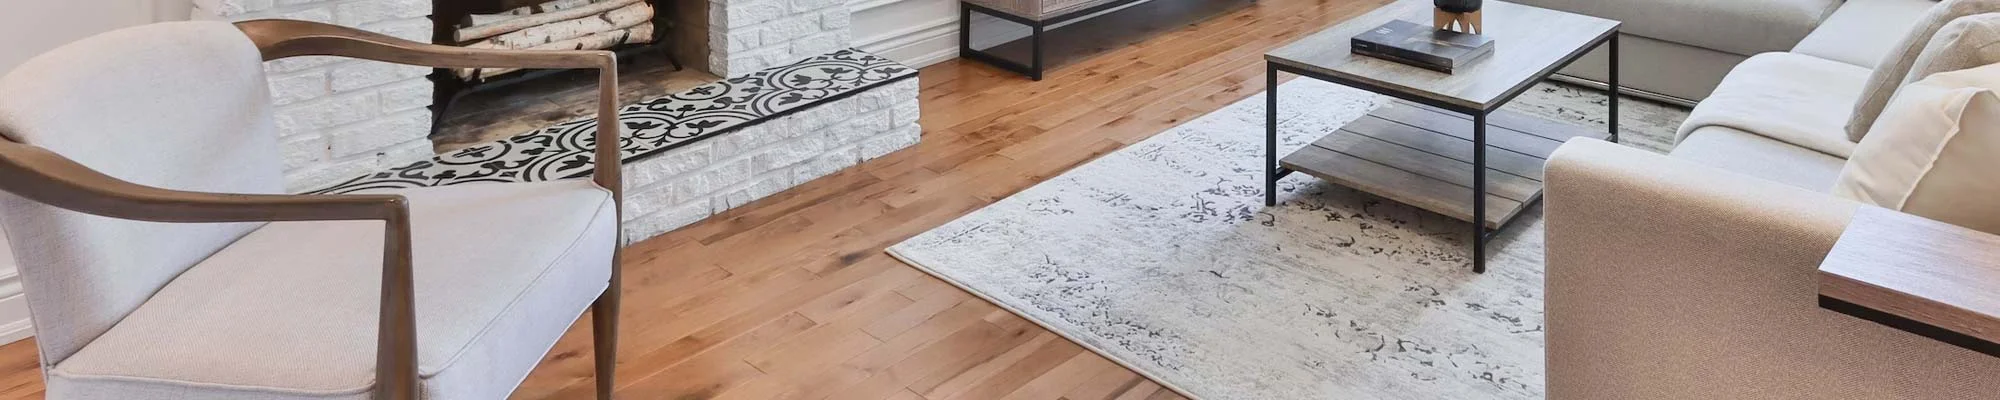 View Sistare Carpets Inc.'s Flooring Product Catalog